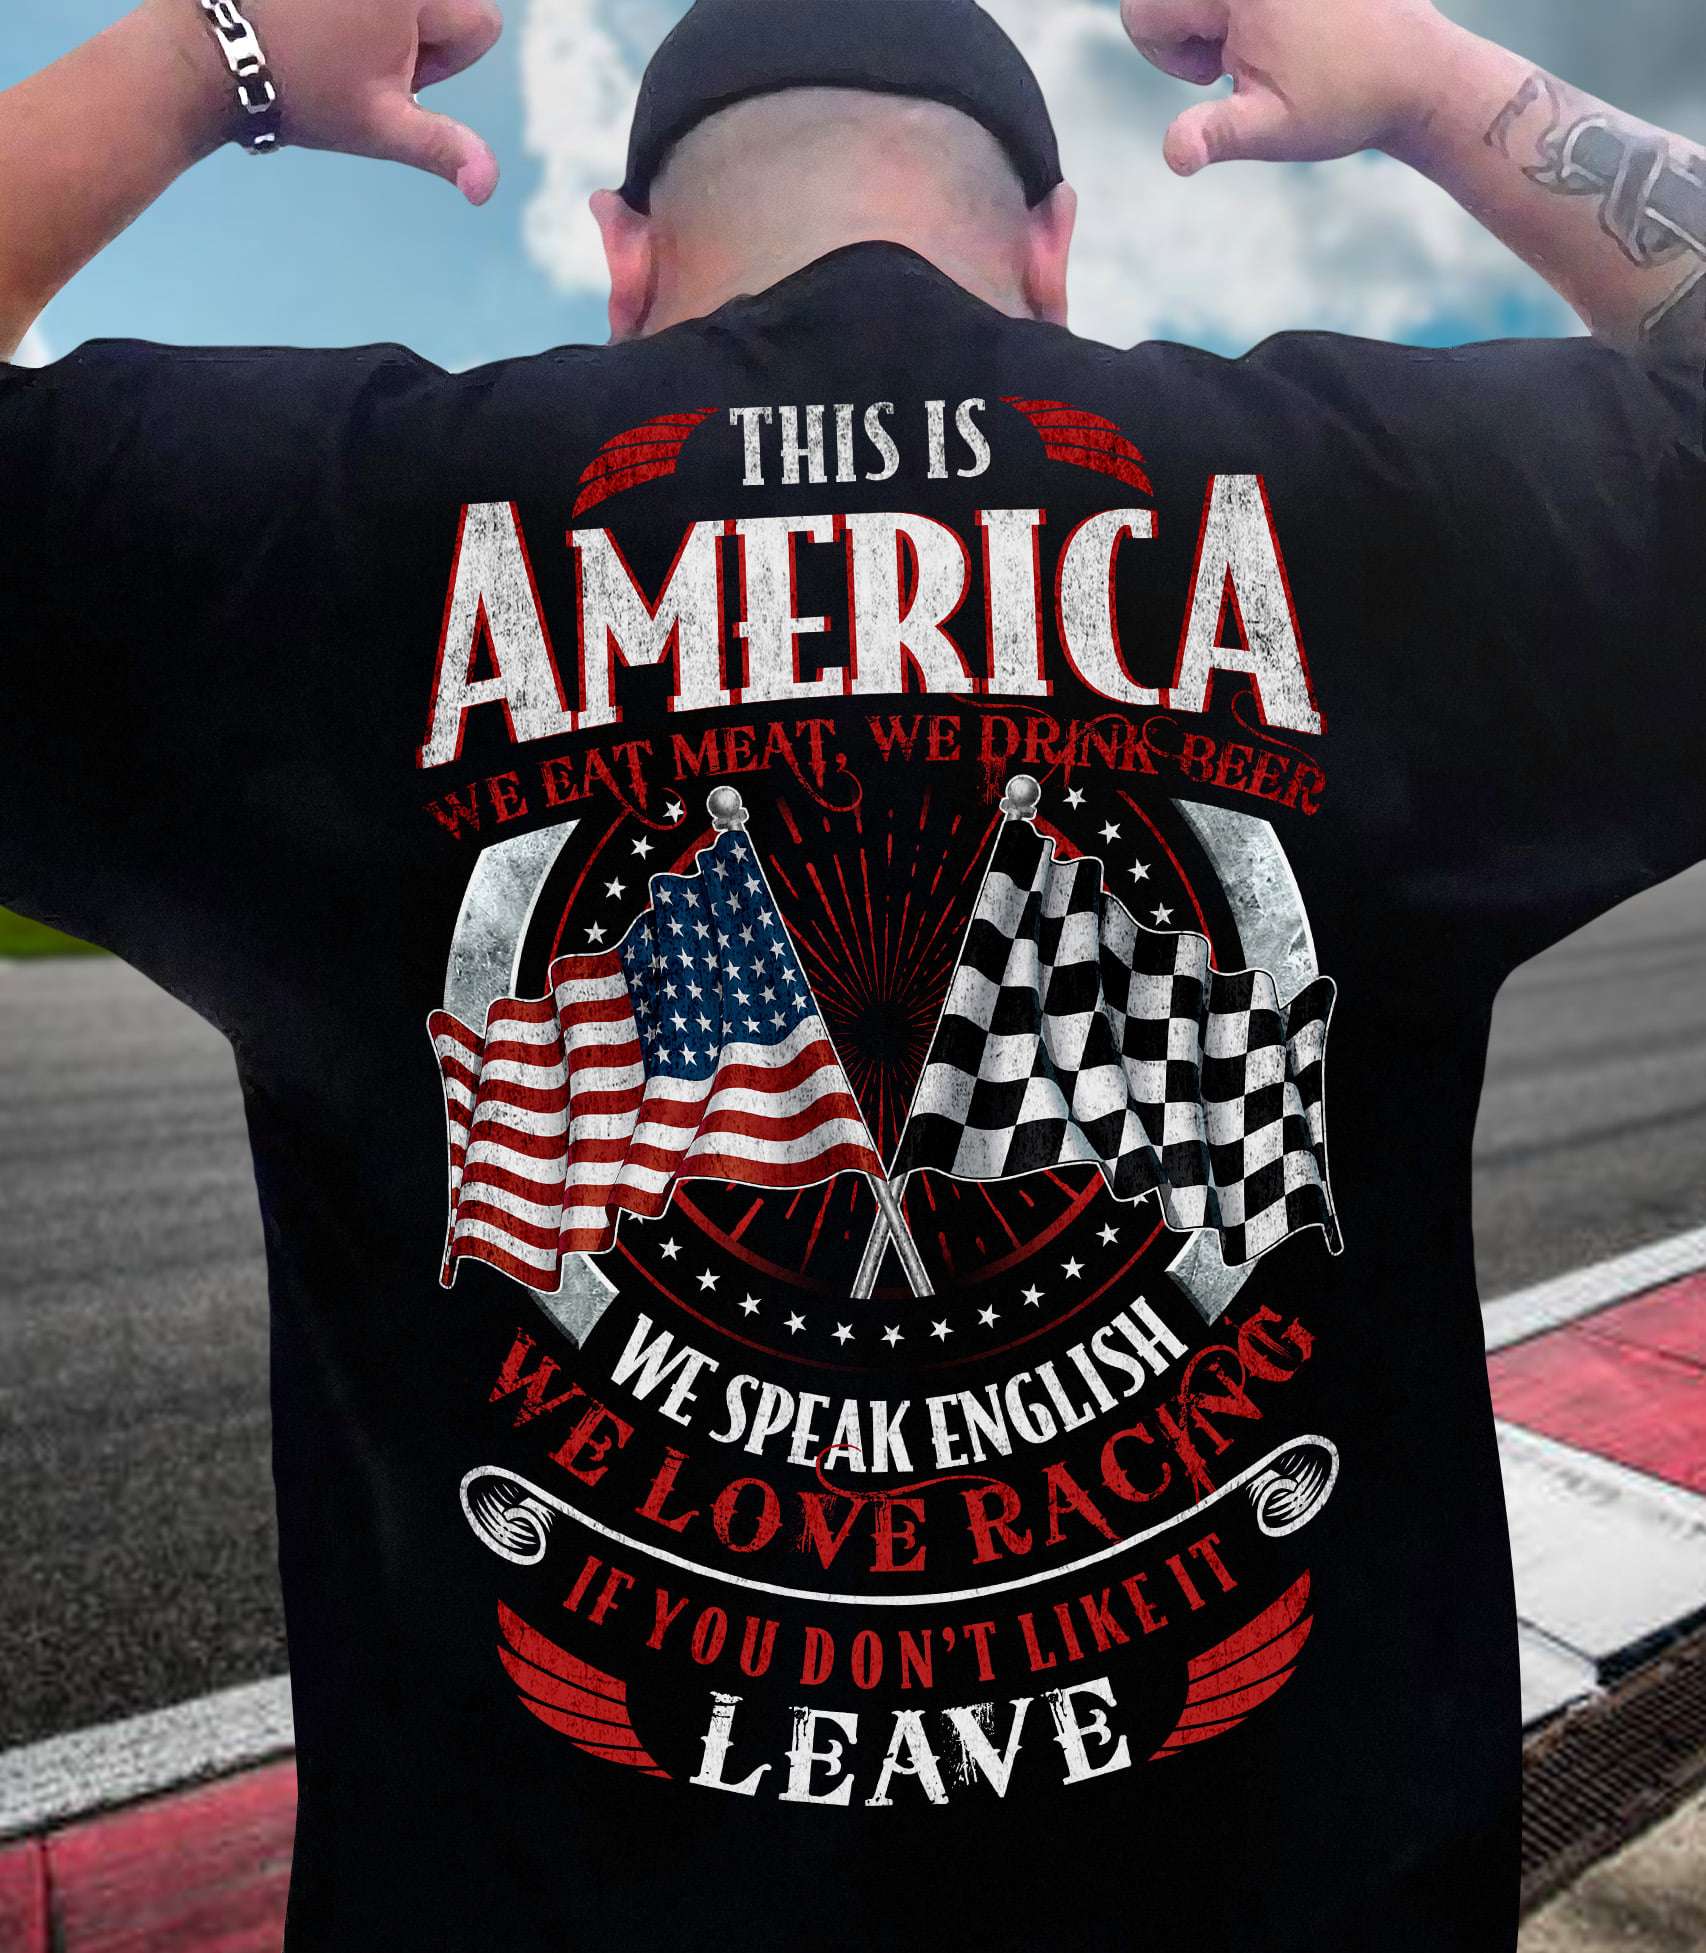 America Flag Racing Flag- This is america we eat neat we drink beer we speak english we love racing if you don't like it leave